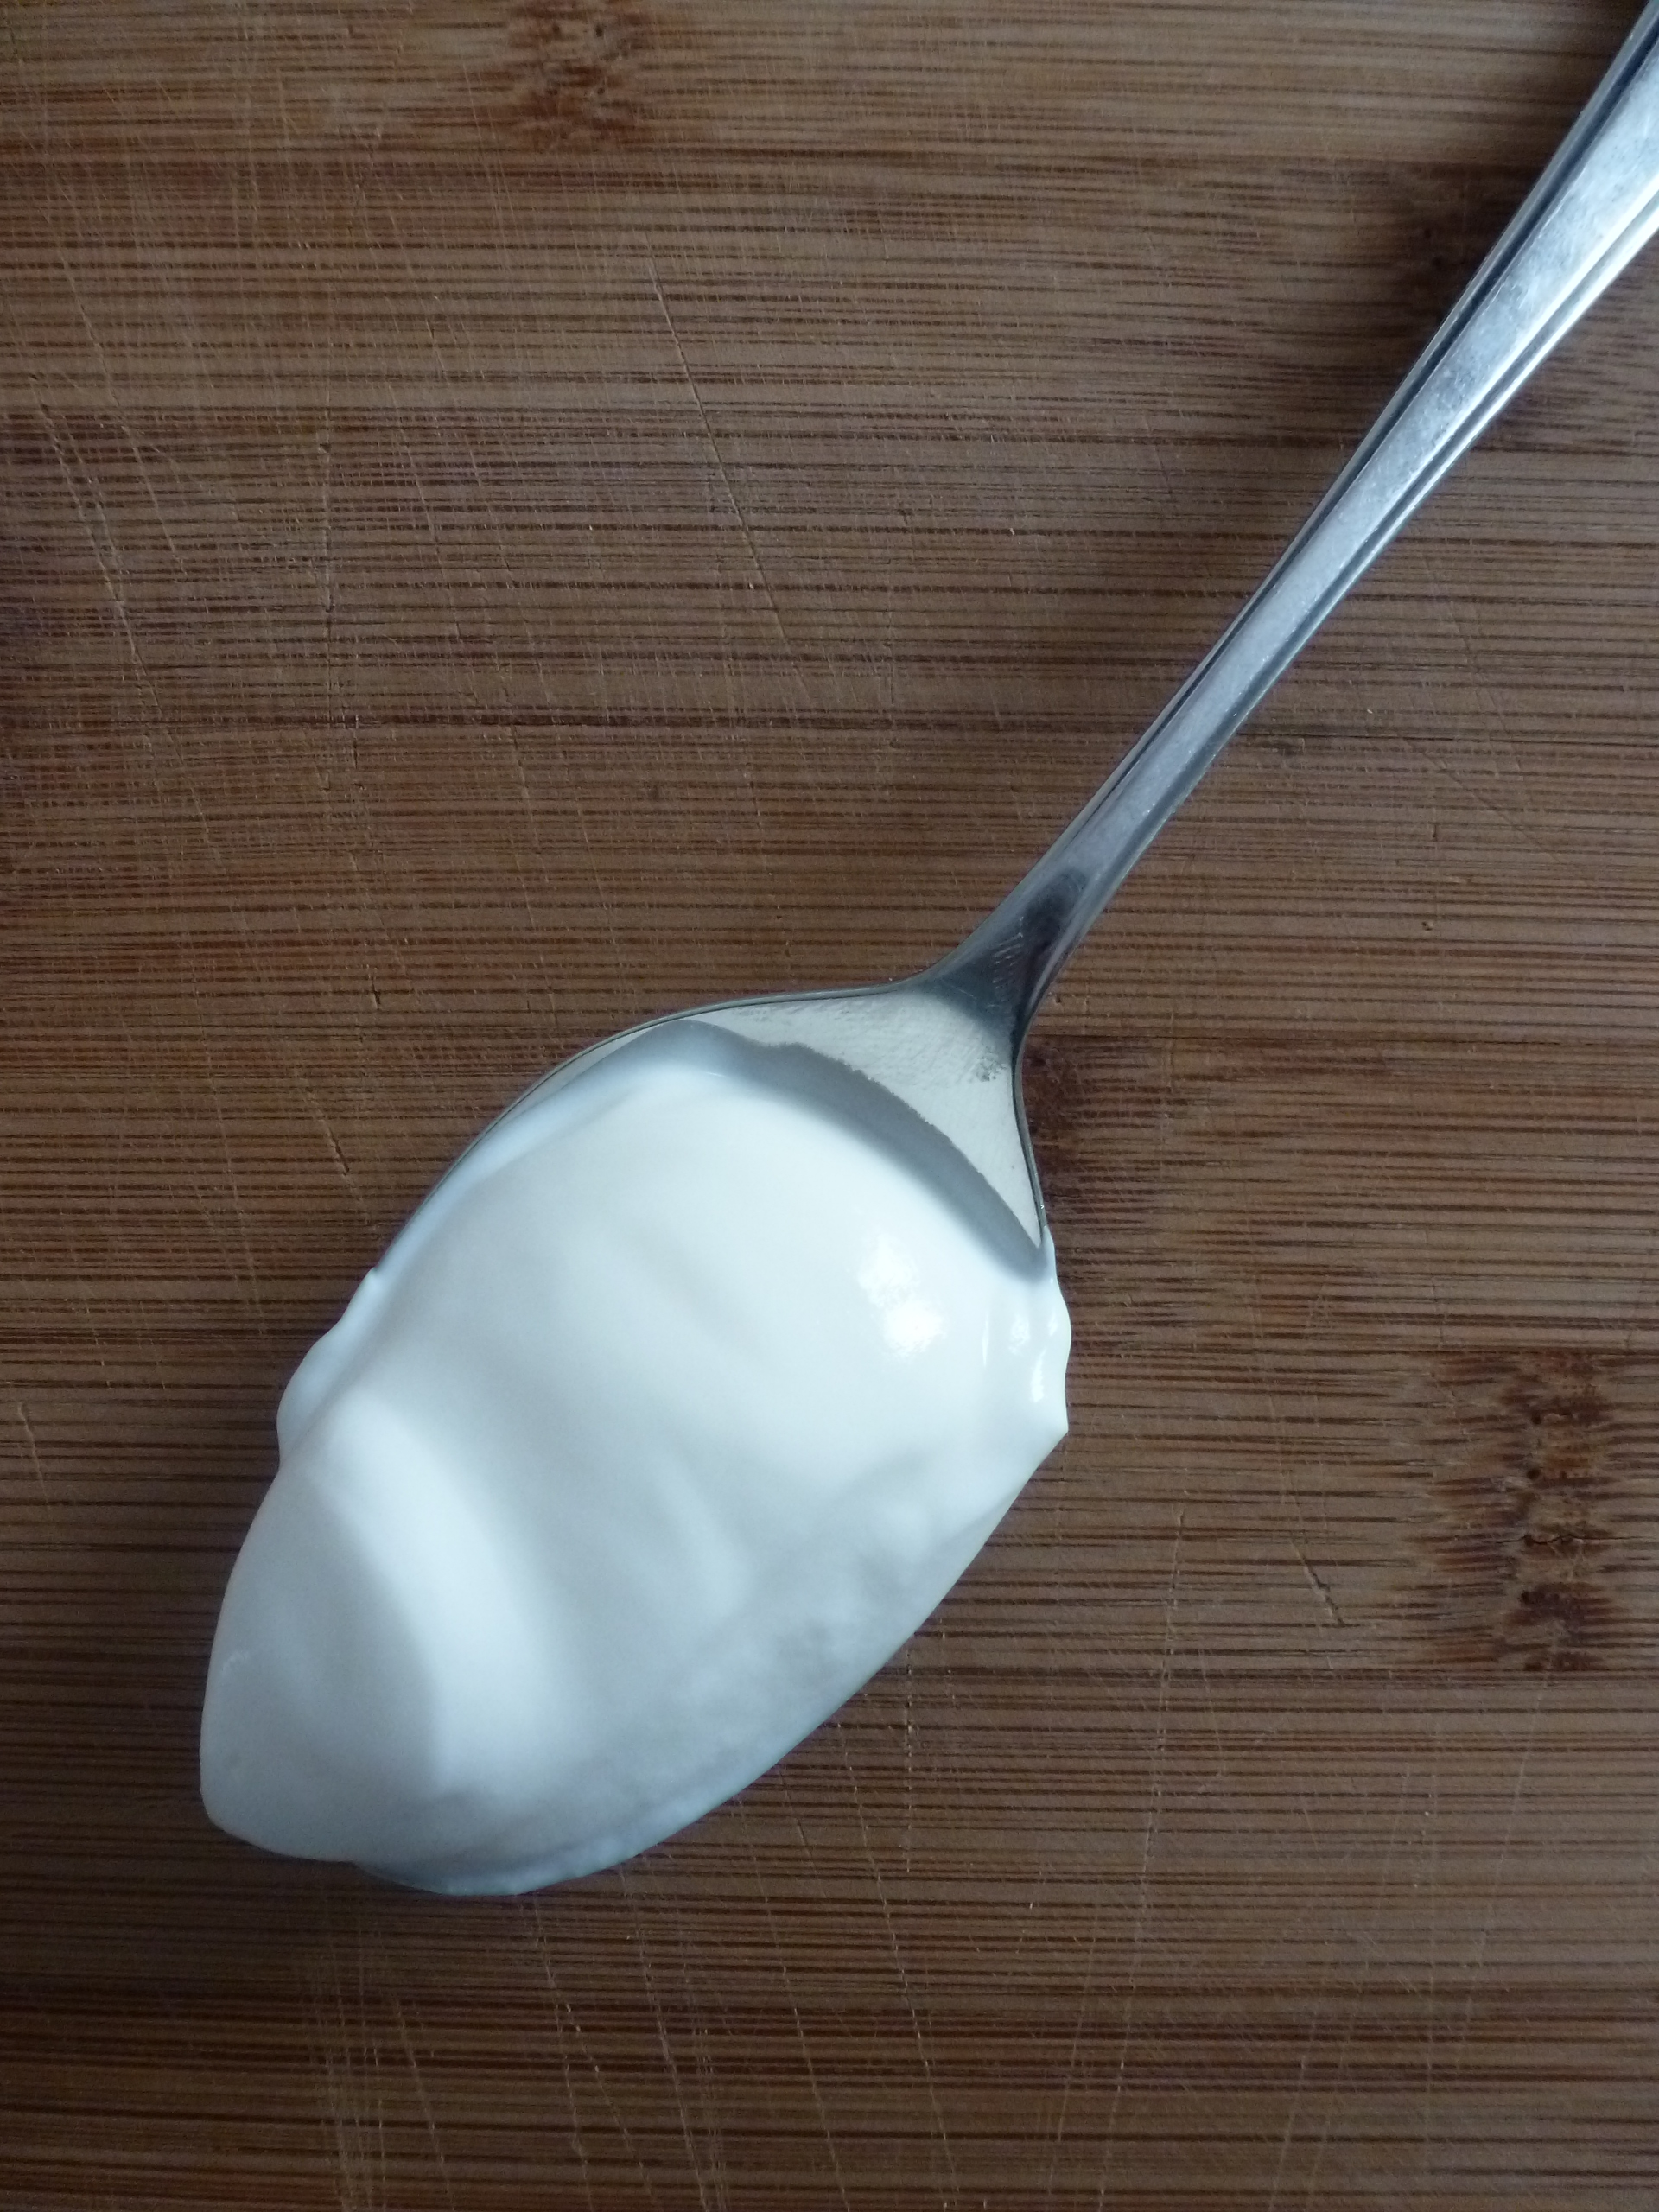 A spoonful of crème fraîche